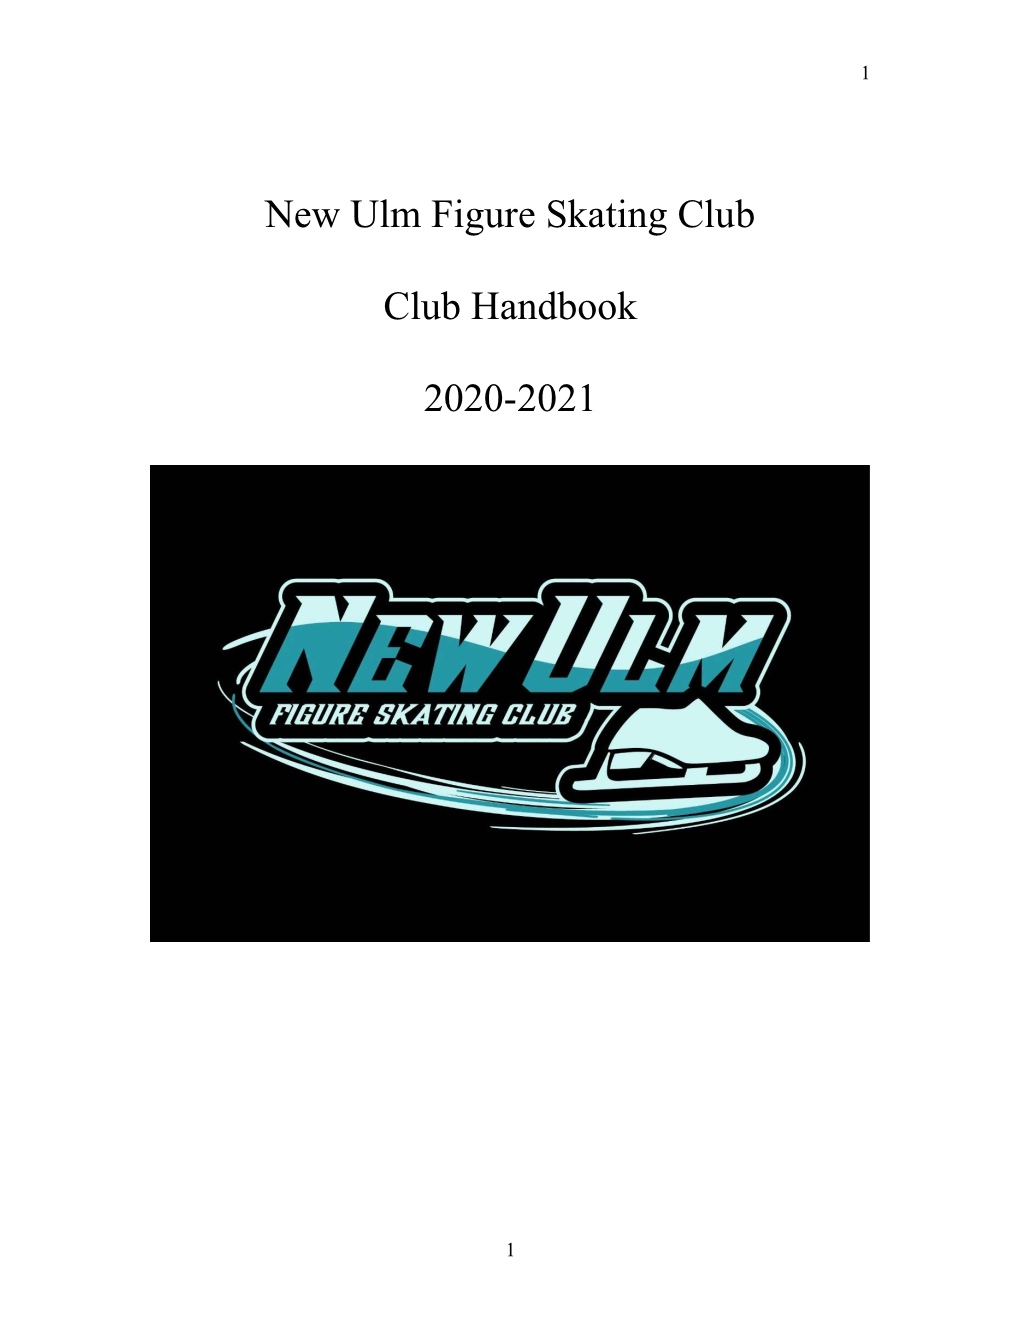 New Ulm Figure Skating Club Club Handbook 2020-2021